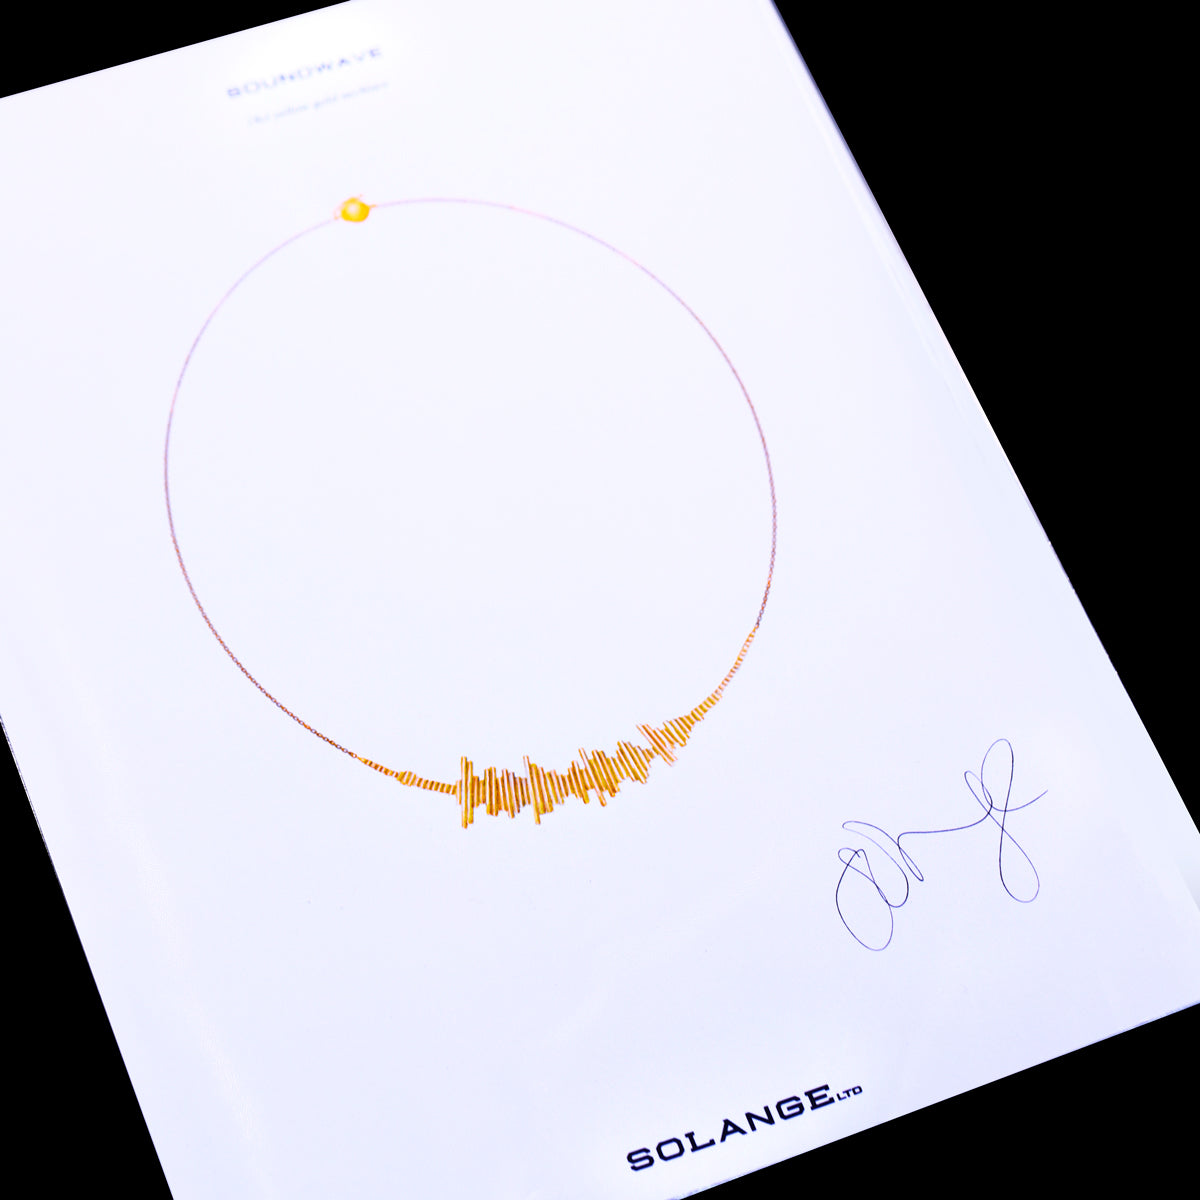 Solange Azagury-Partridge hand drawn 18k yellow gold soundwave necklace design